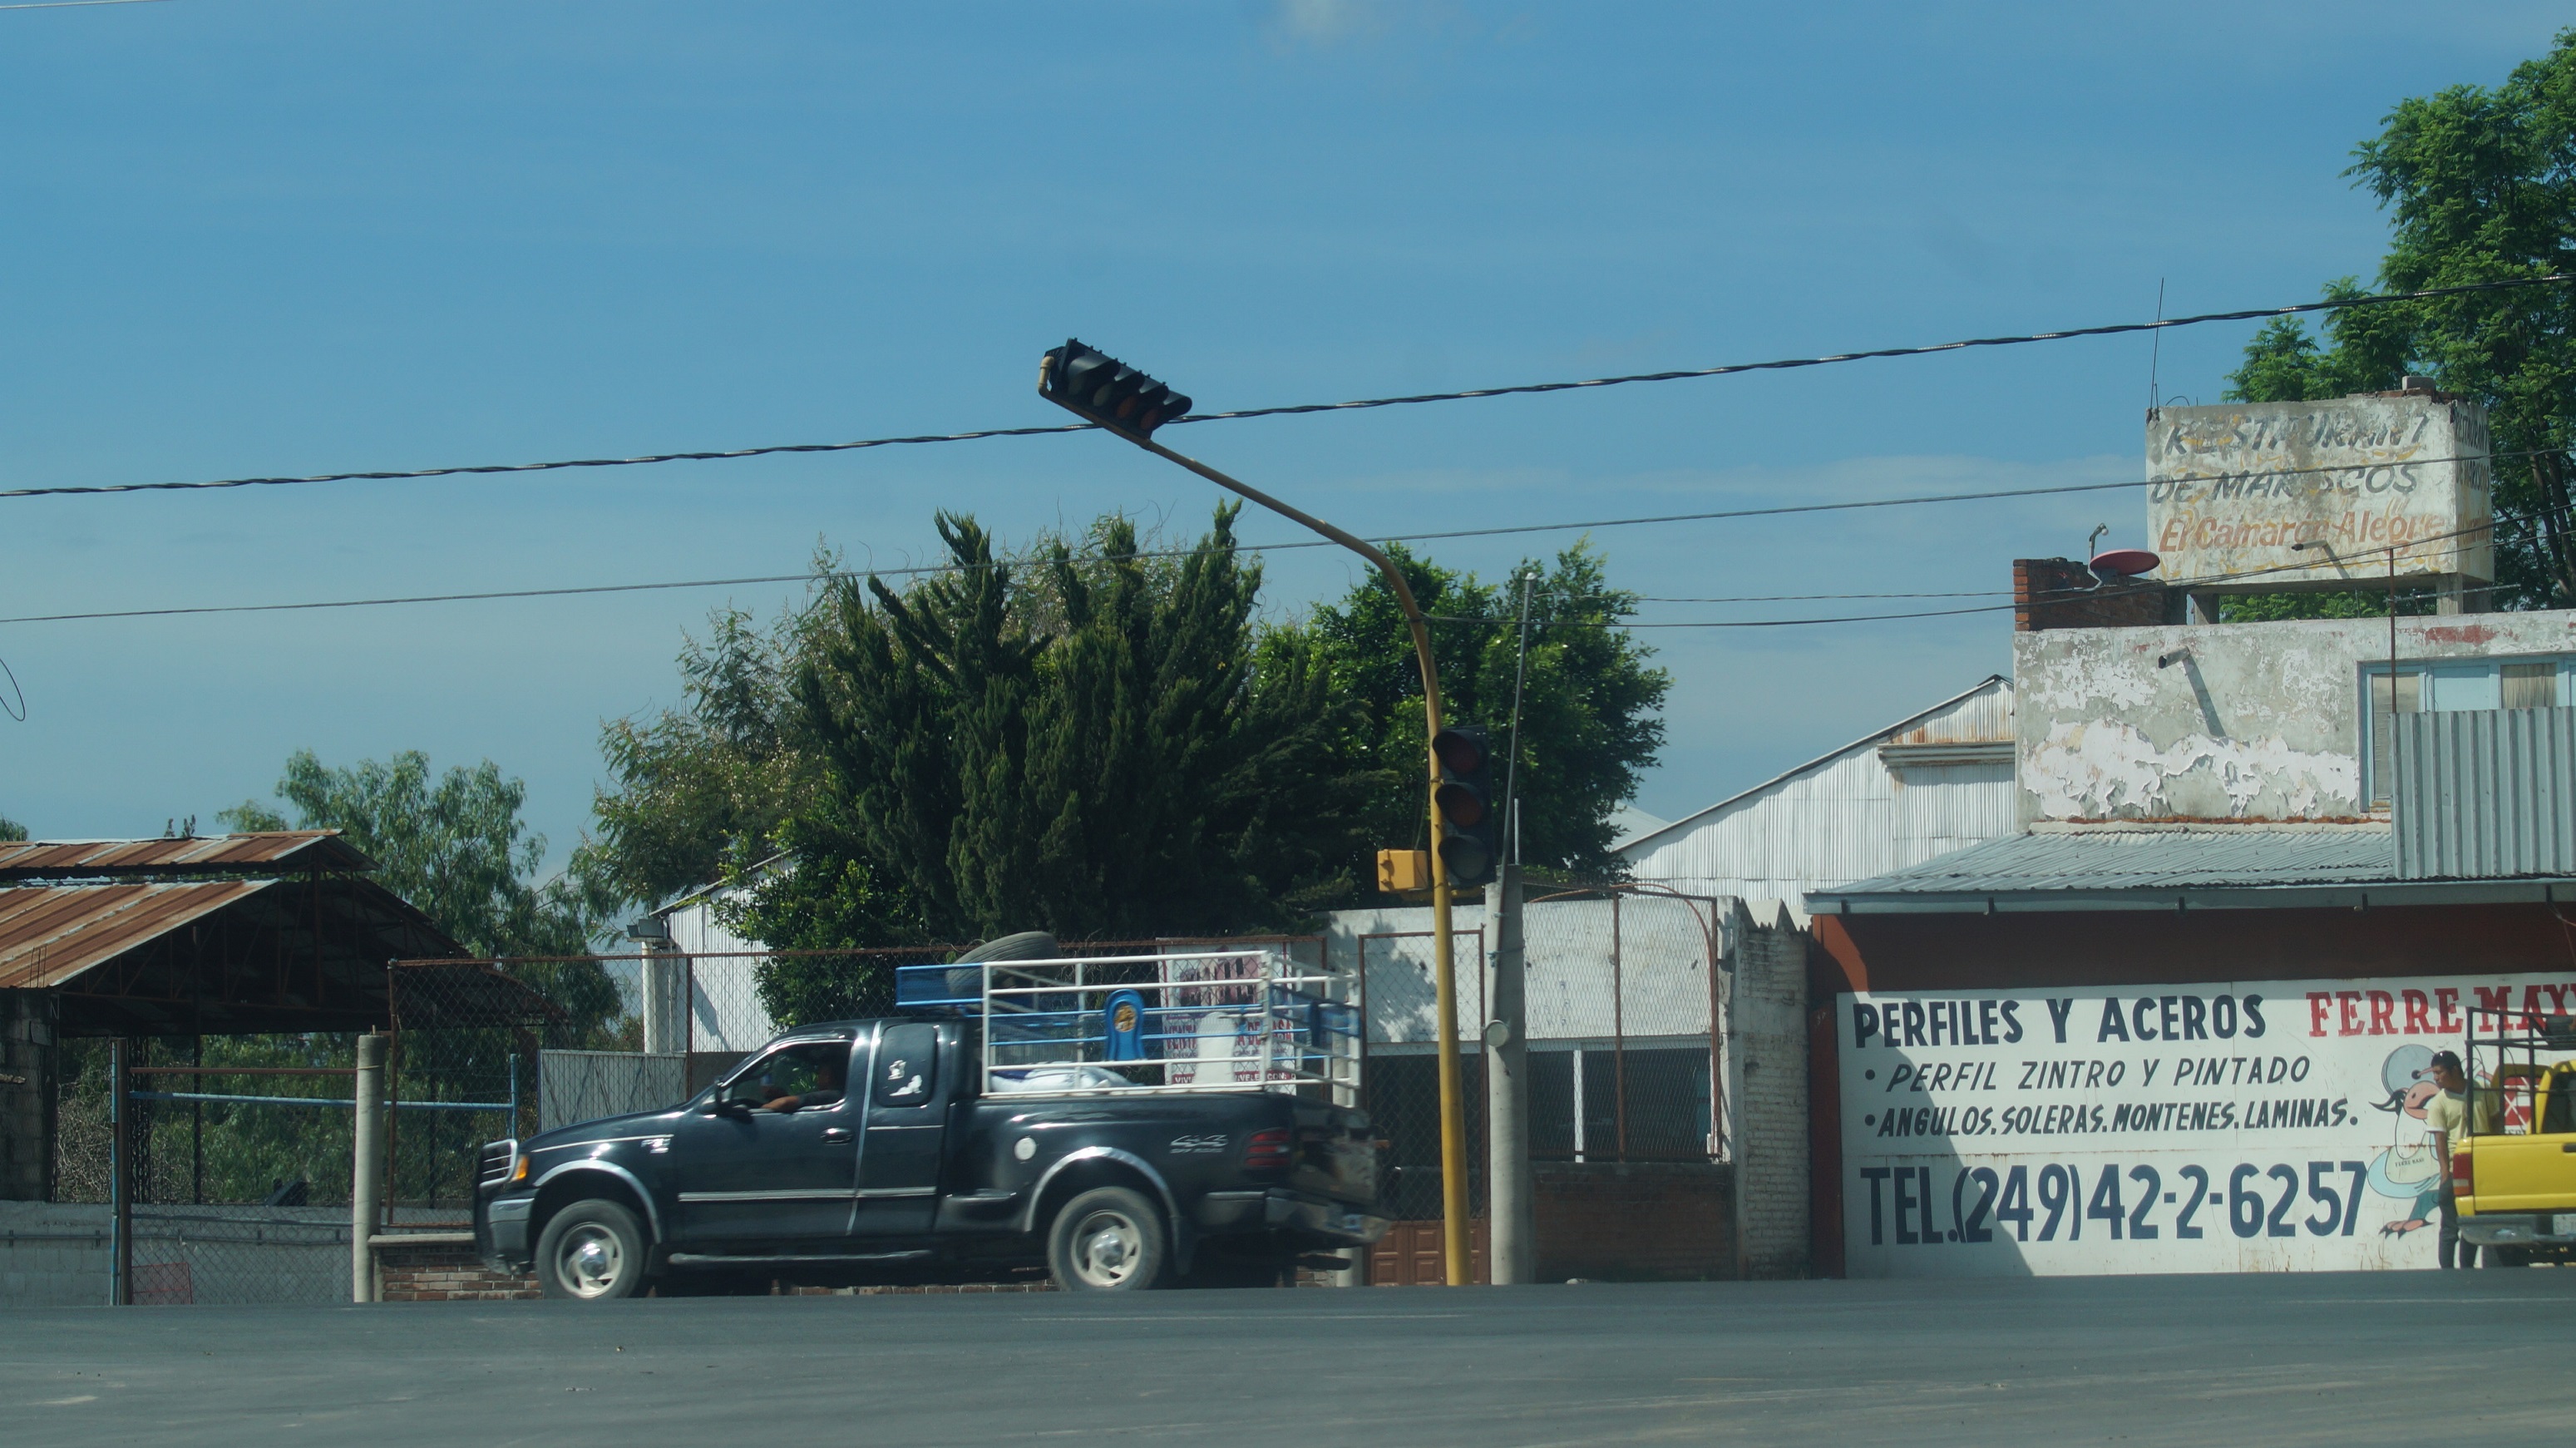 Semáforos no funcionan en Tecamachalco, vecinos piden solución